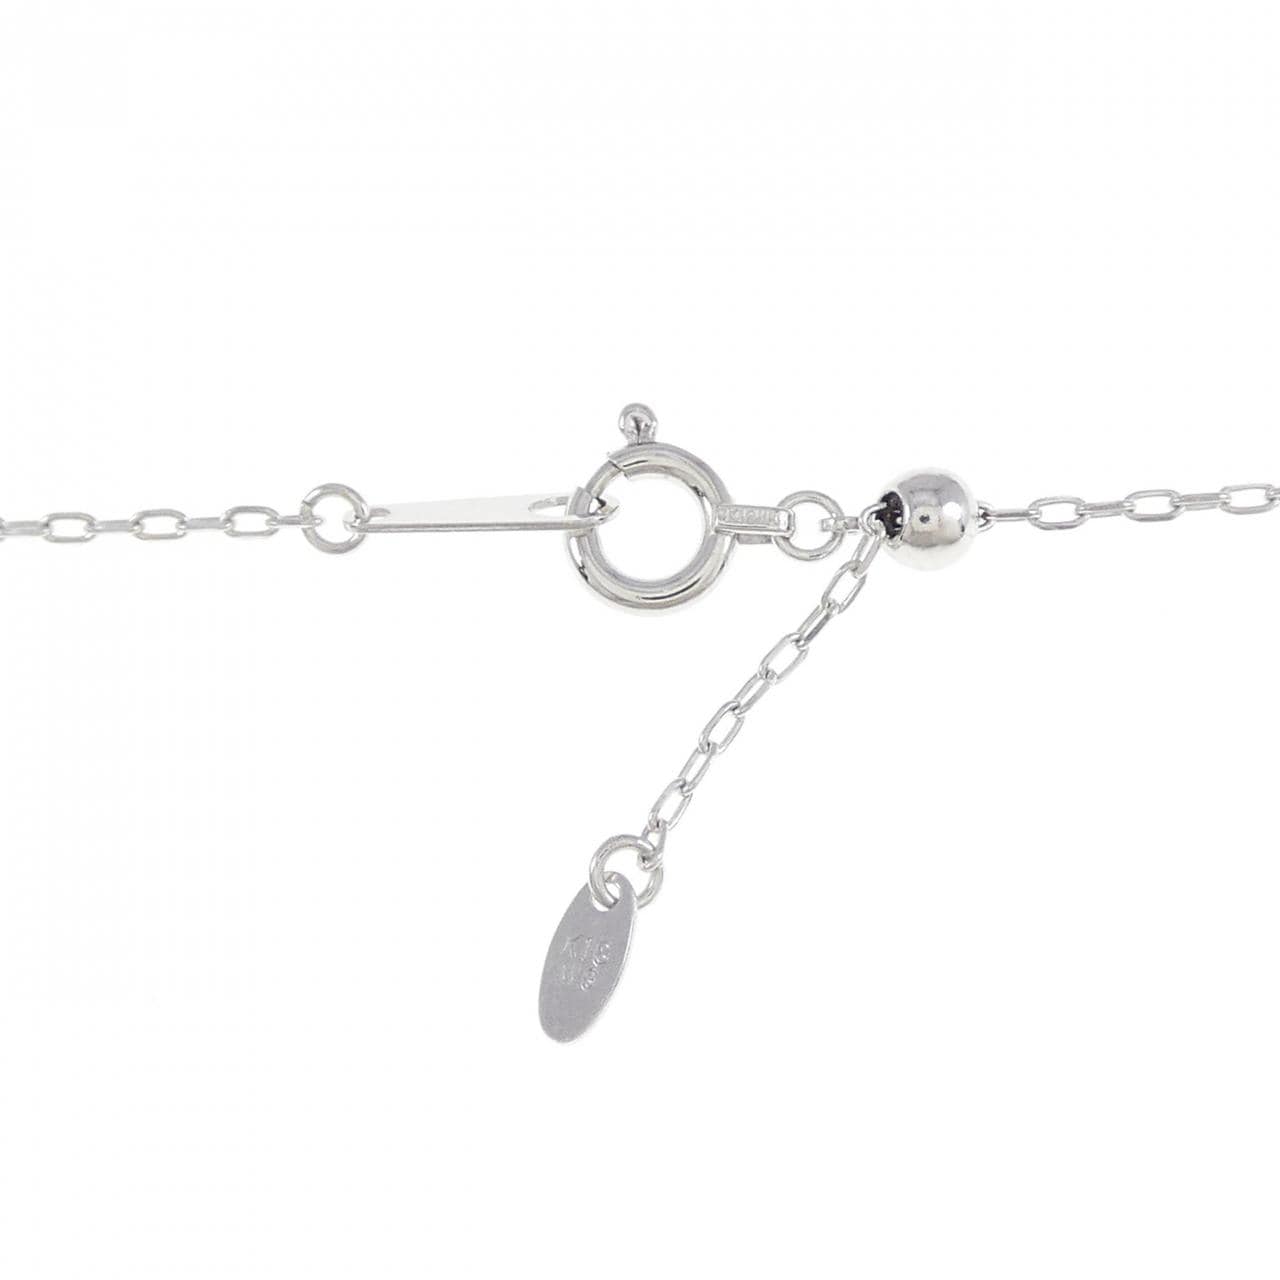 K18WG Akoya pearl necklace 8.5mm